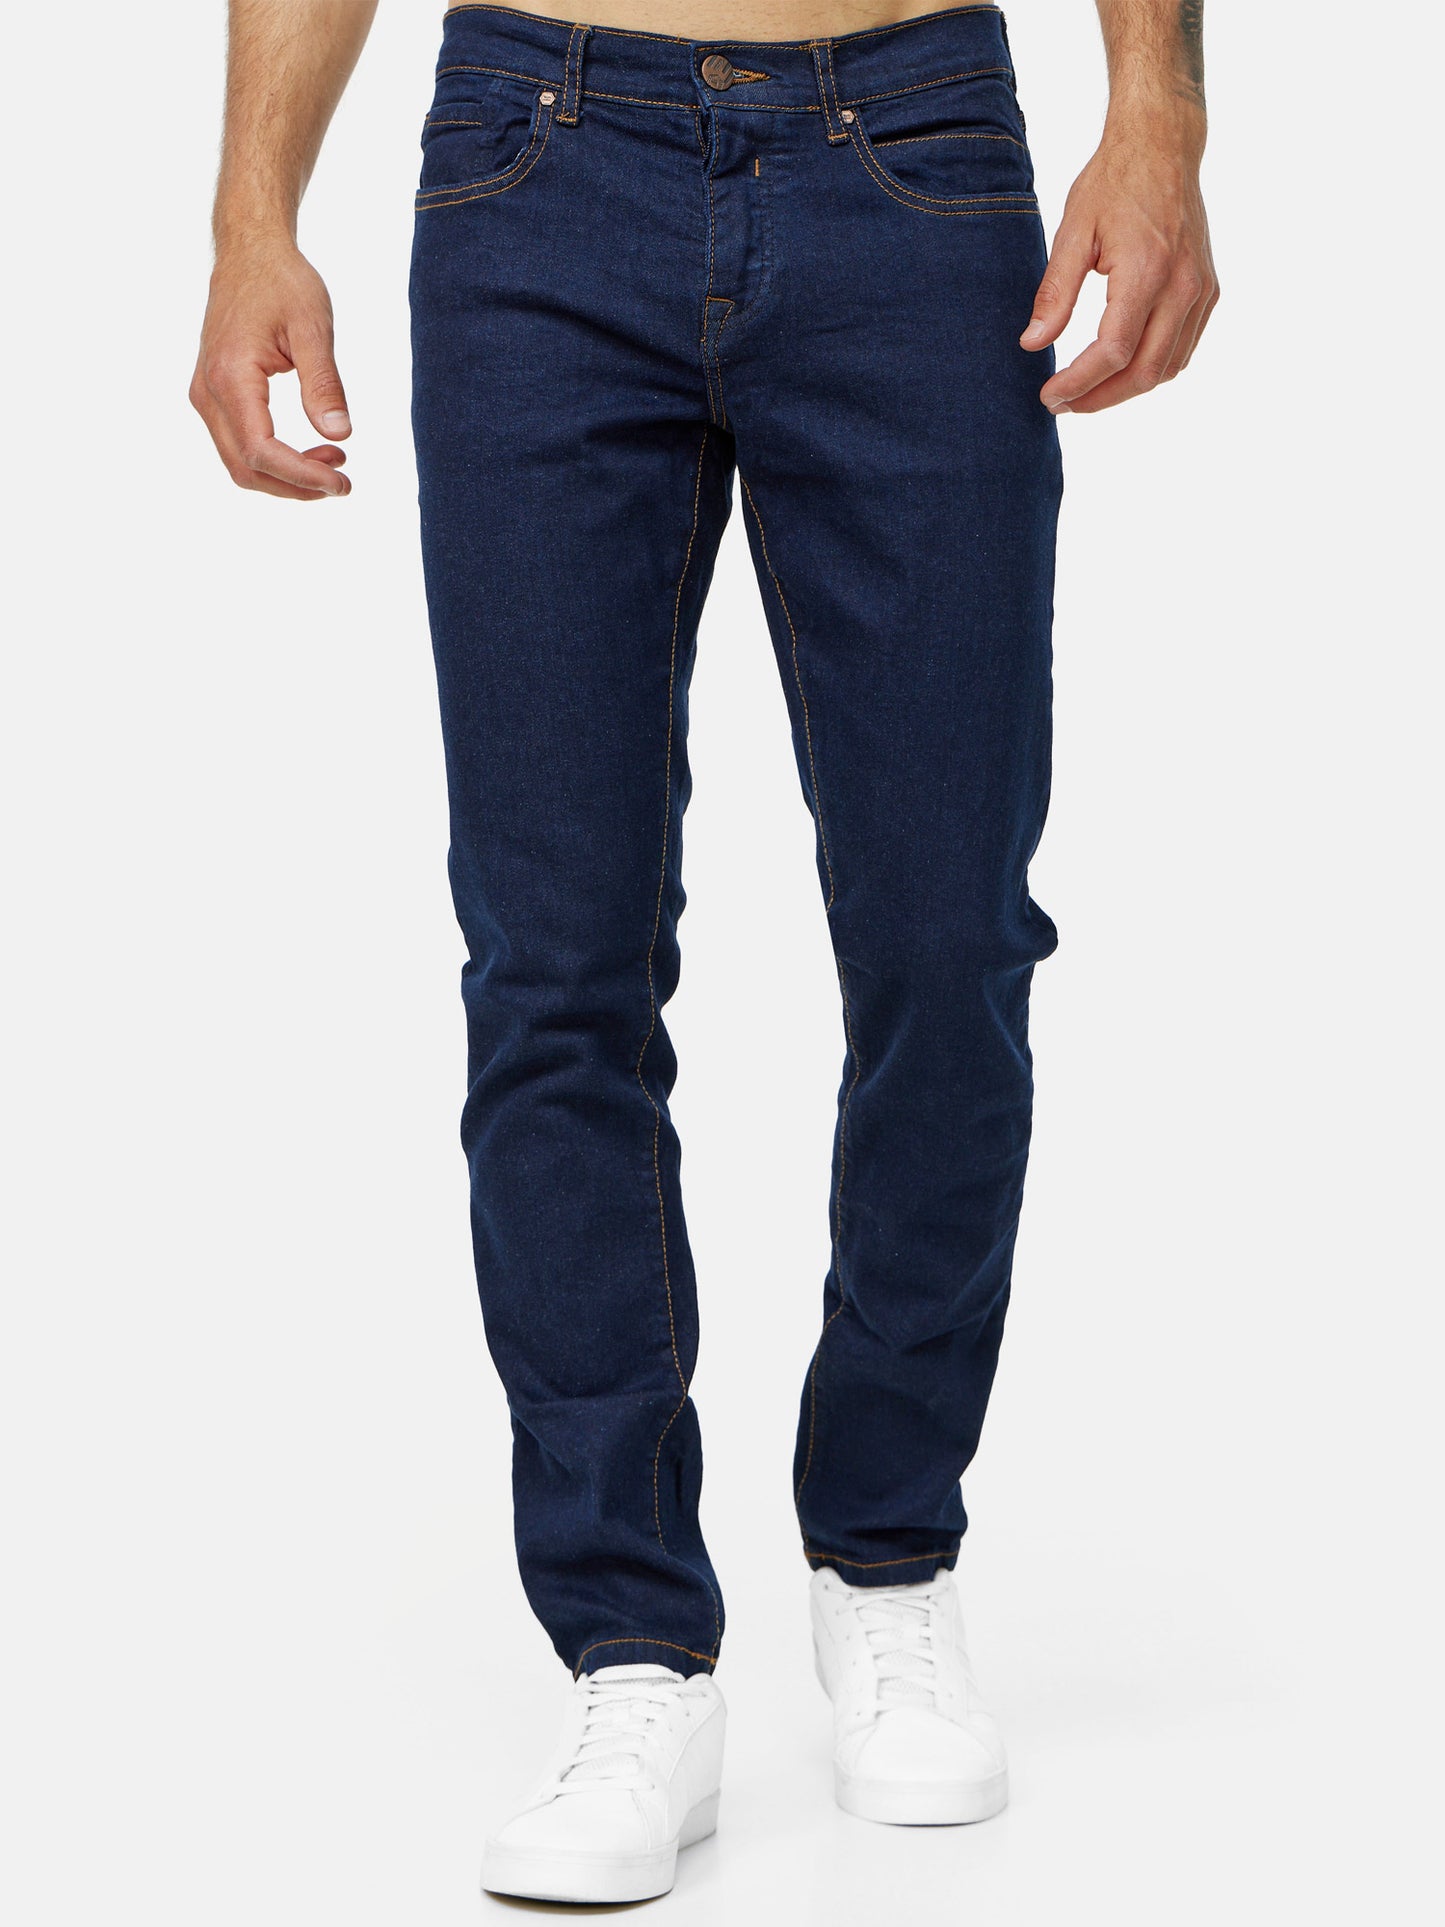 Tazzio Herren Jeans Slim Fit 16531